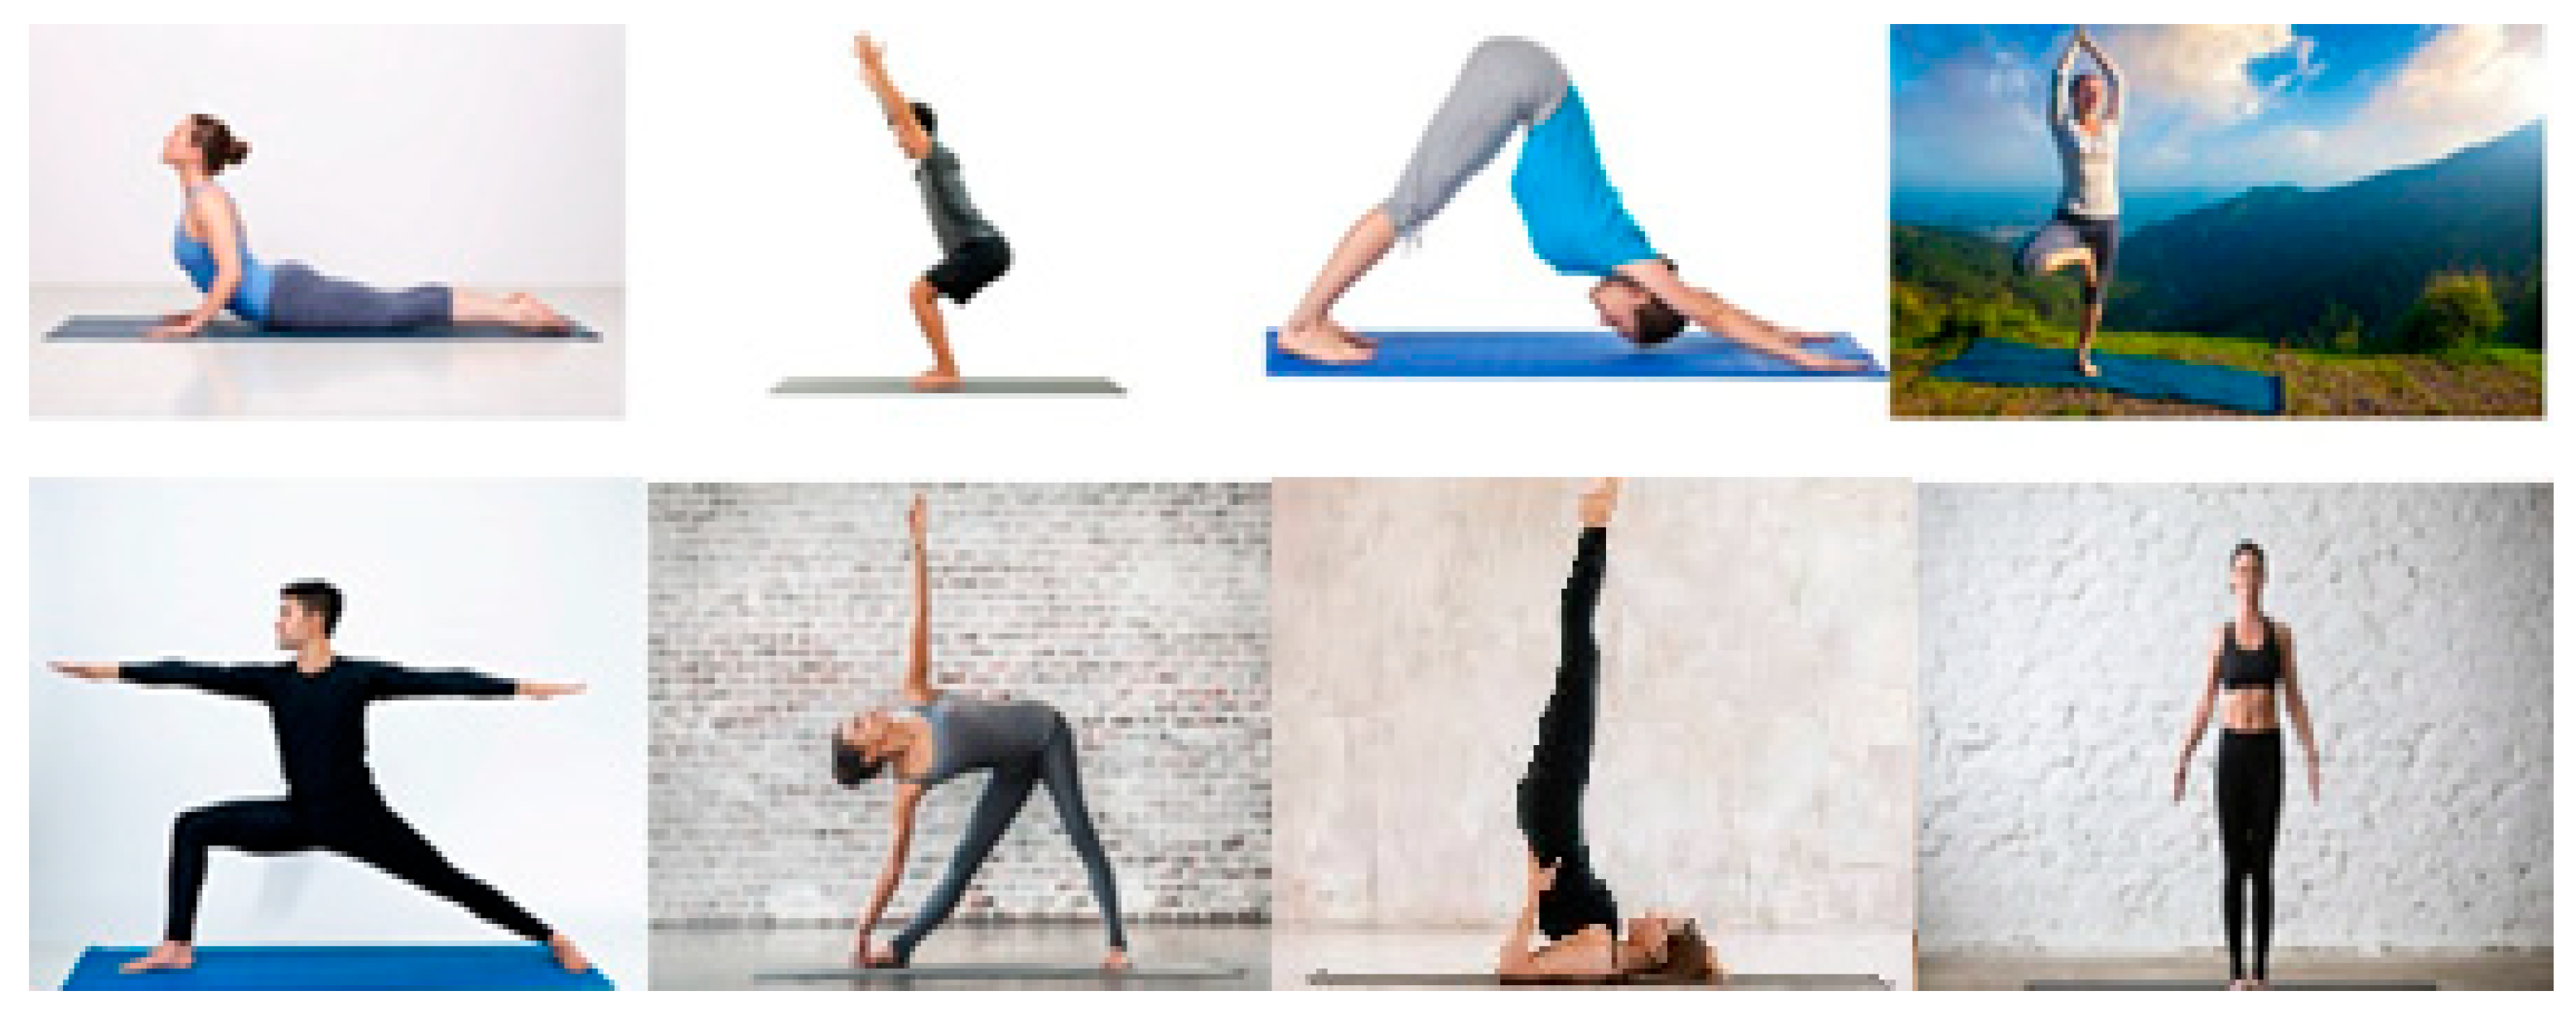 Live Yoga Session- 7 Sitting Yoga Asana | Forward Bend - Twisting Yoga Poses  | Yoga with Urmi Pandya - YouTube